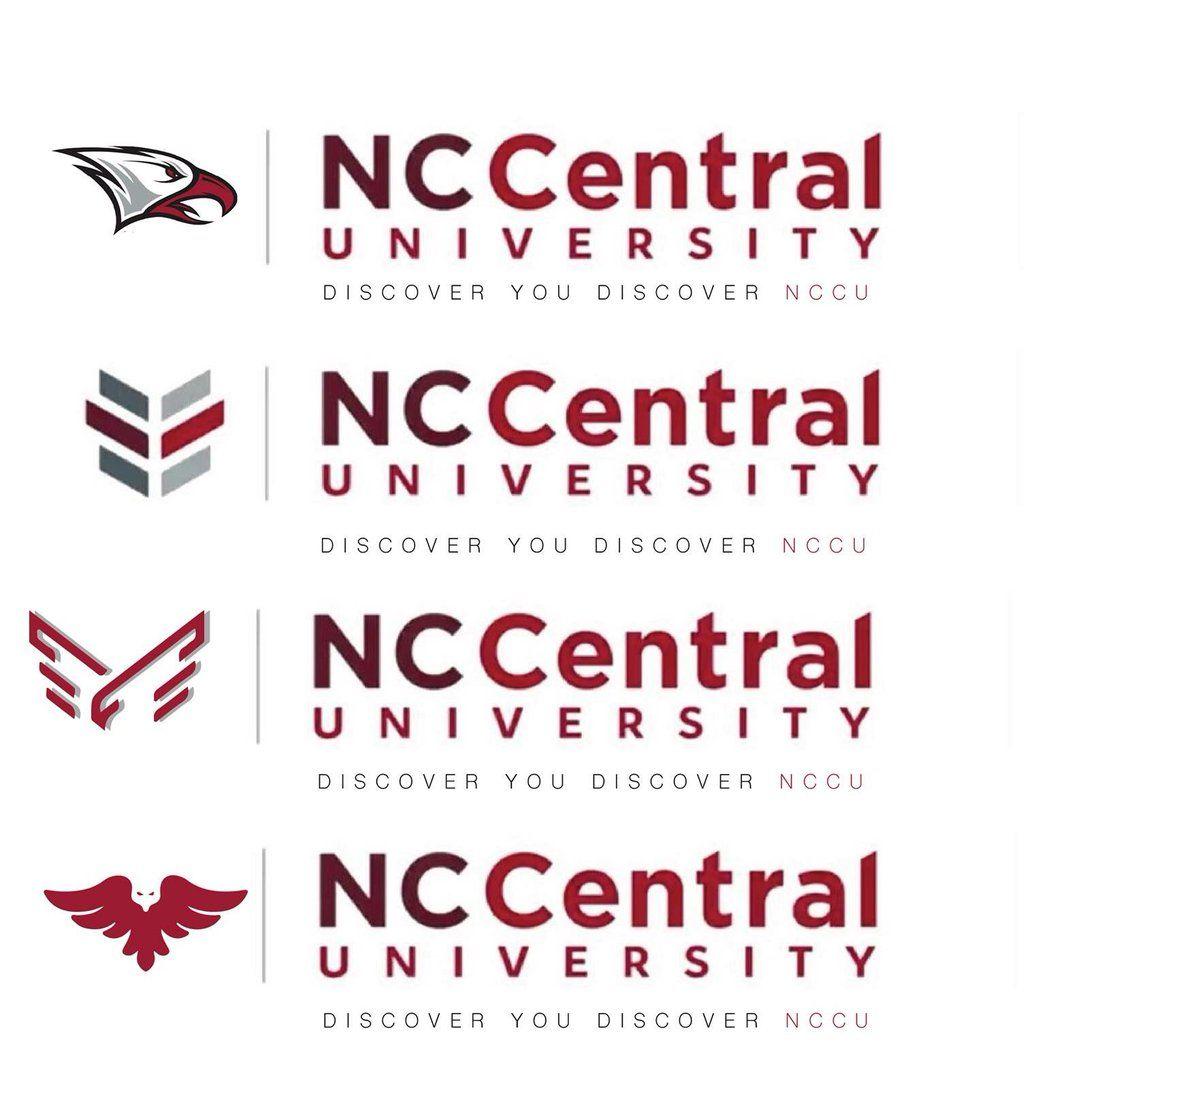 NCCU Logo - Rebranding has students and alumni clamoring for less change